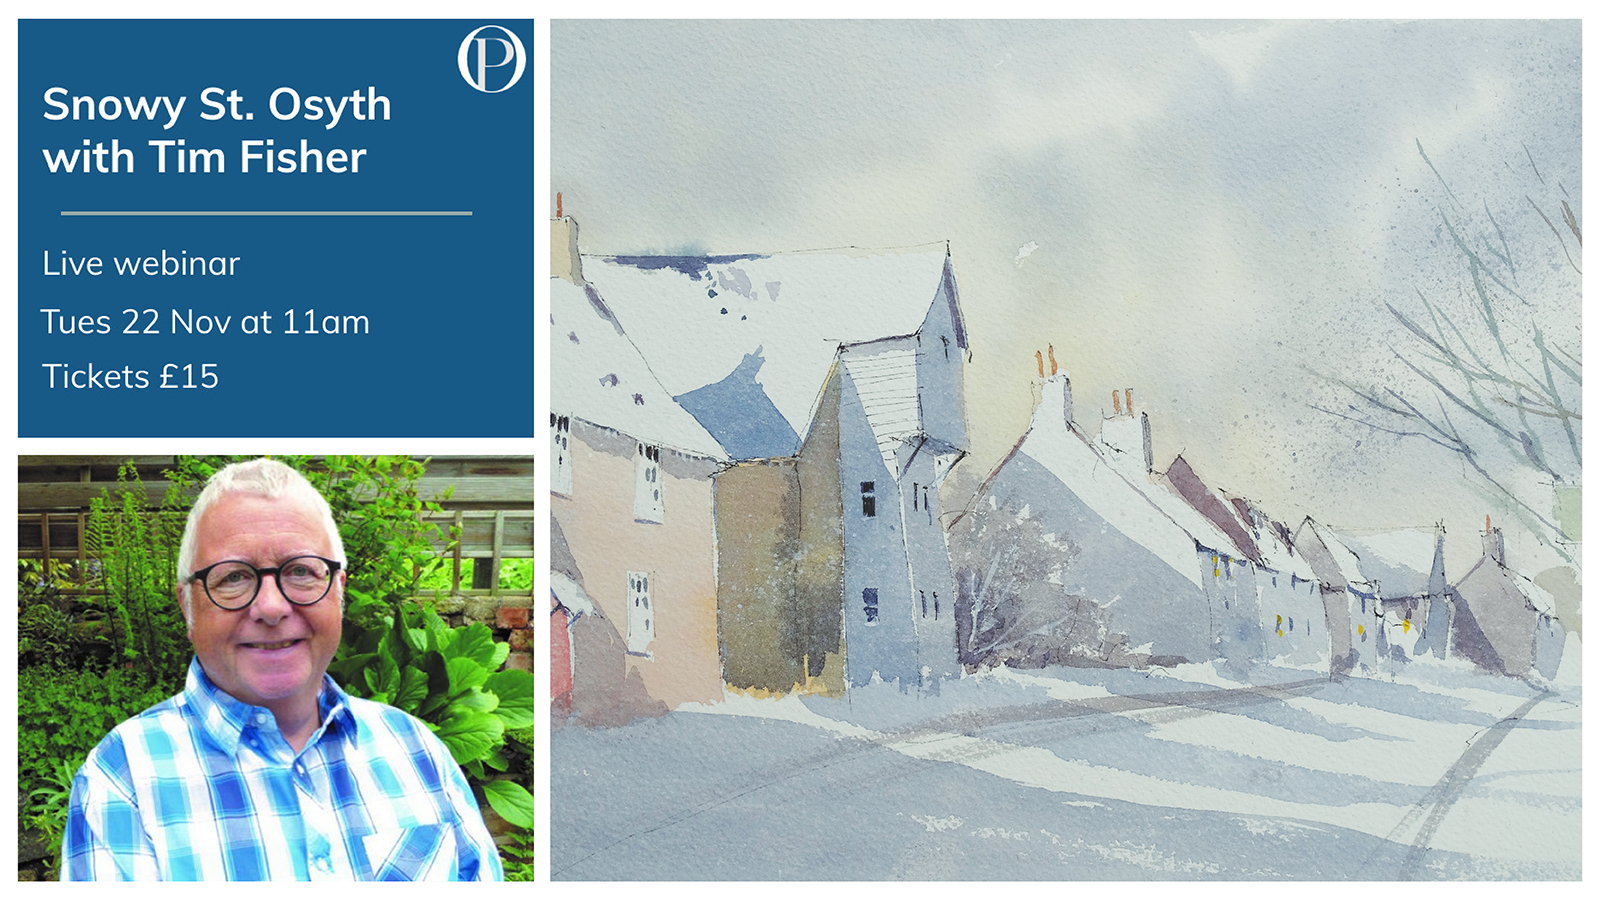 Live Webinar - Snowy St. Osyth with Tim Fisher